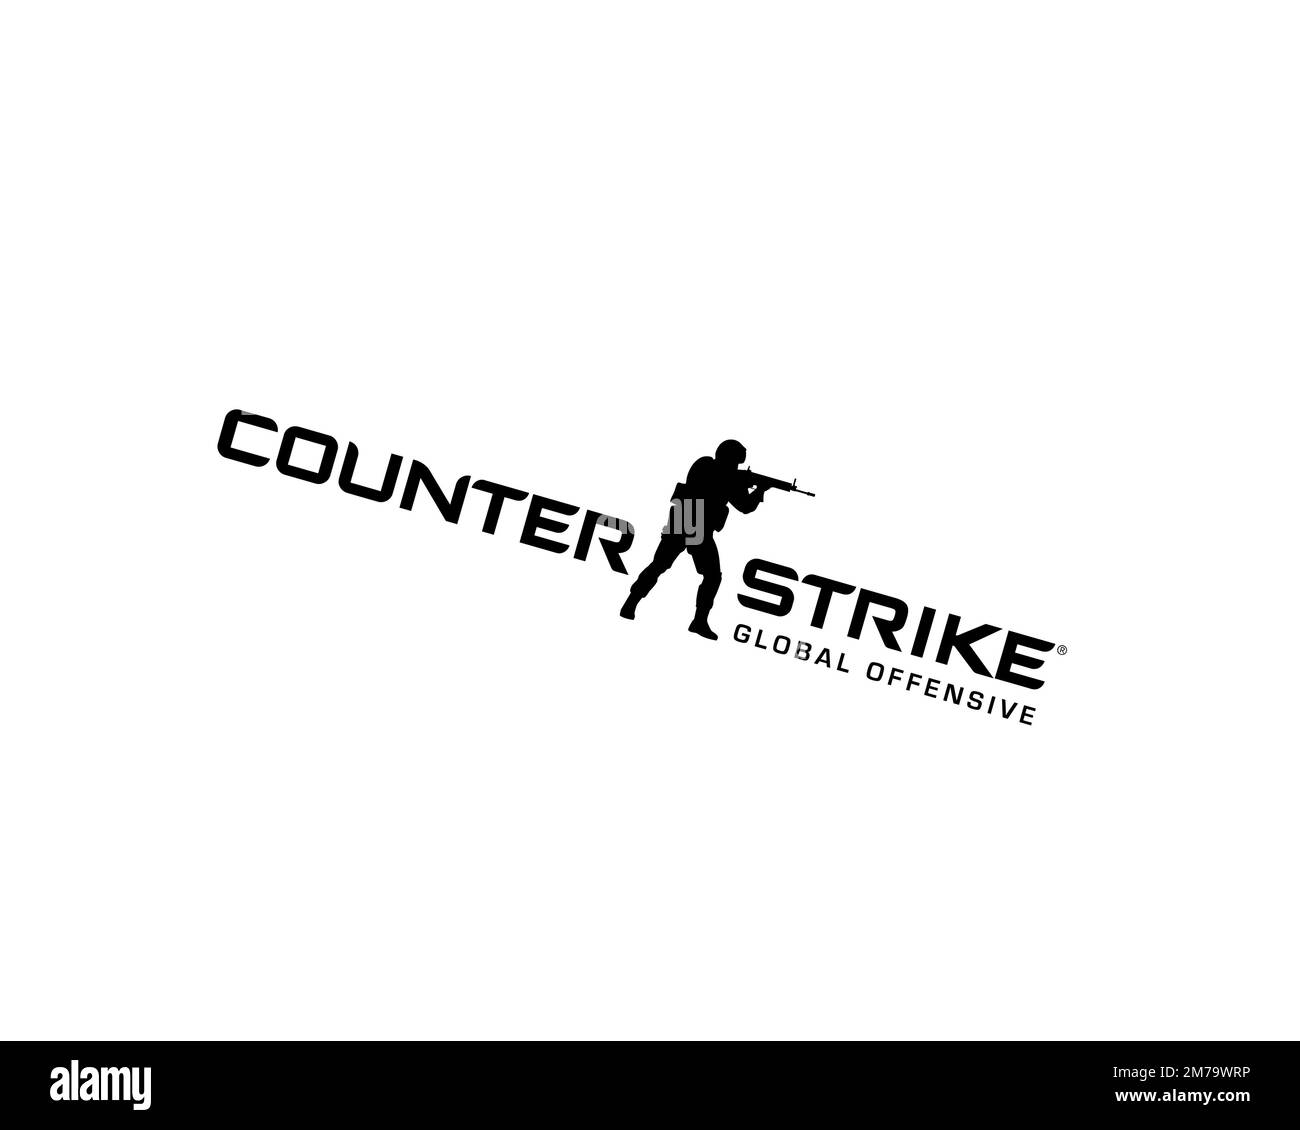 Counter Strike Global Offensive, Logo ruotato, sfondo bianco B Foto Stock